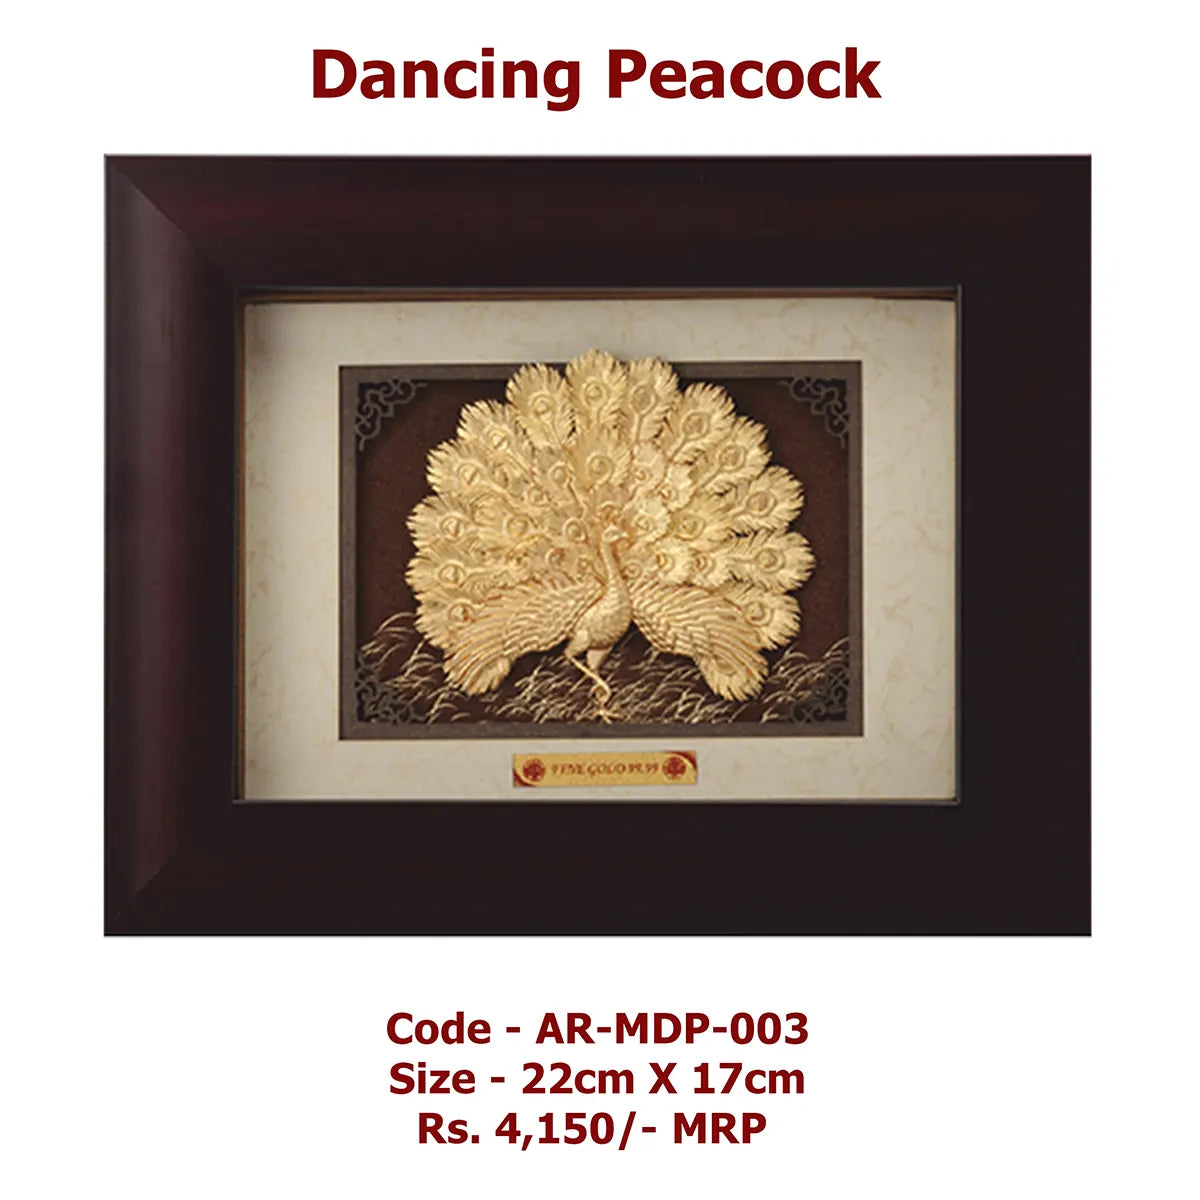 Dancing Peacock Frame 22cm x 17cm size